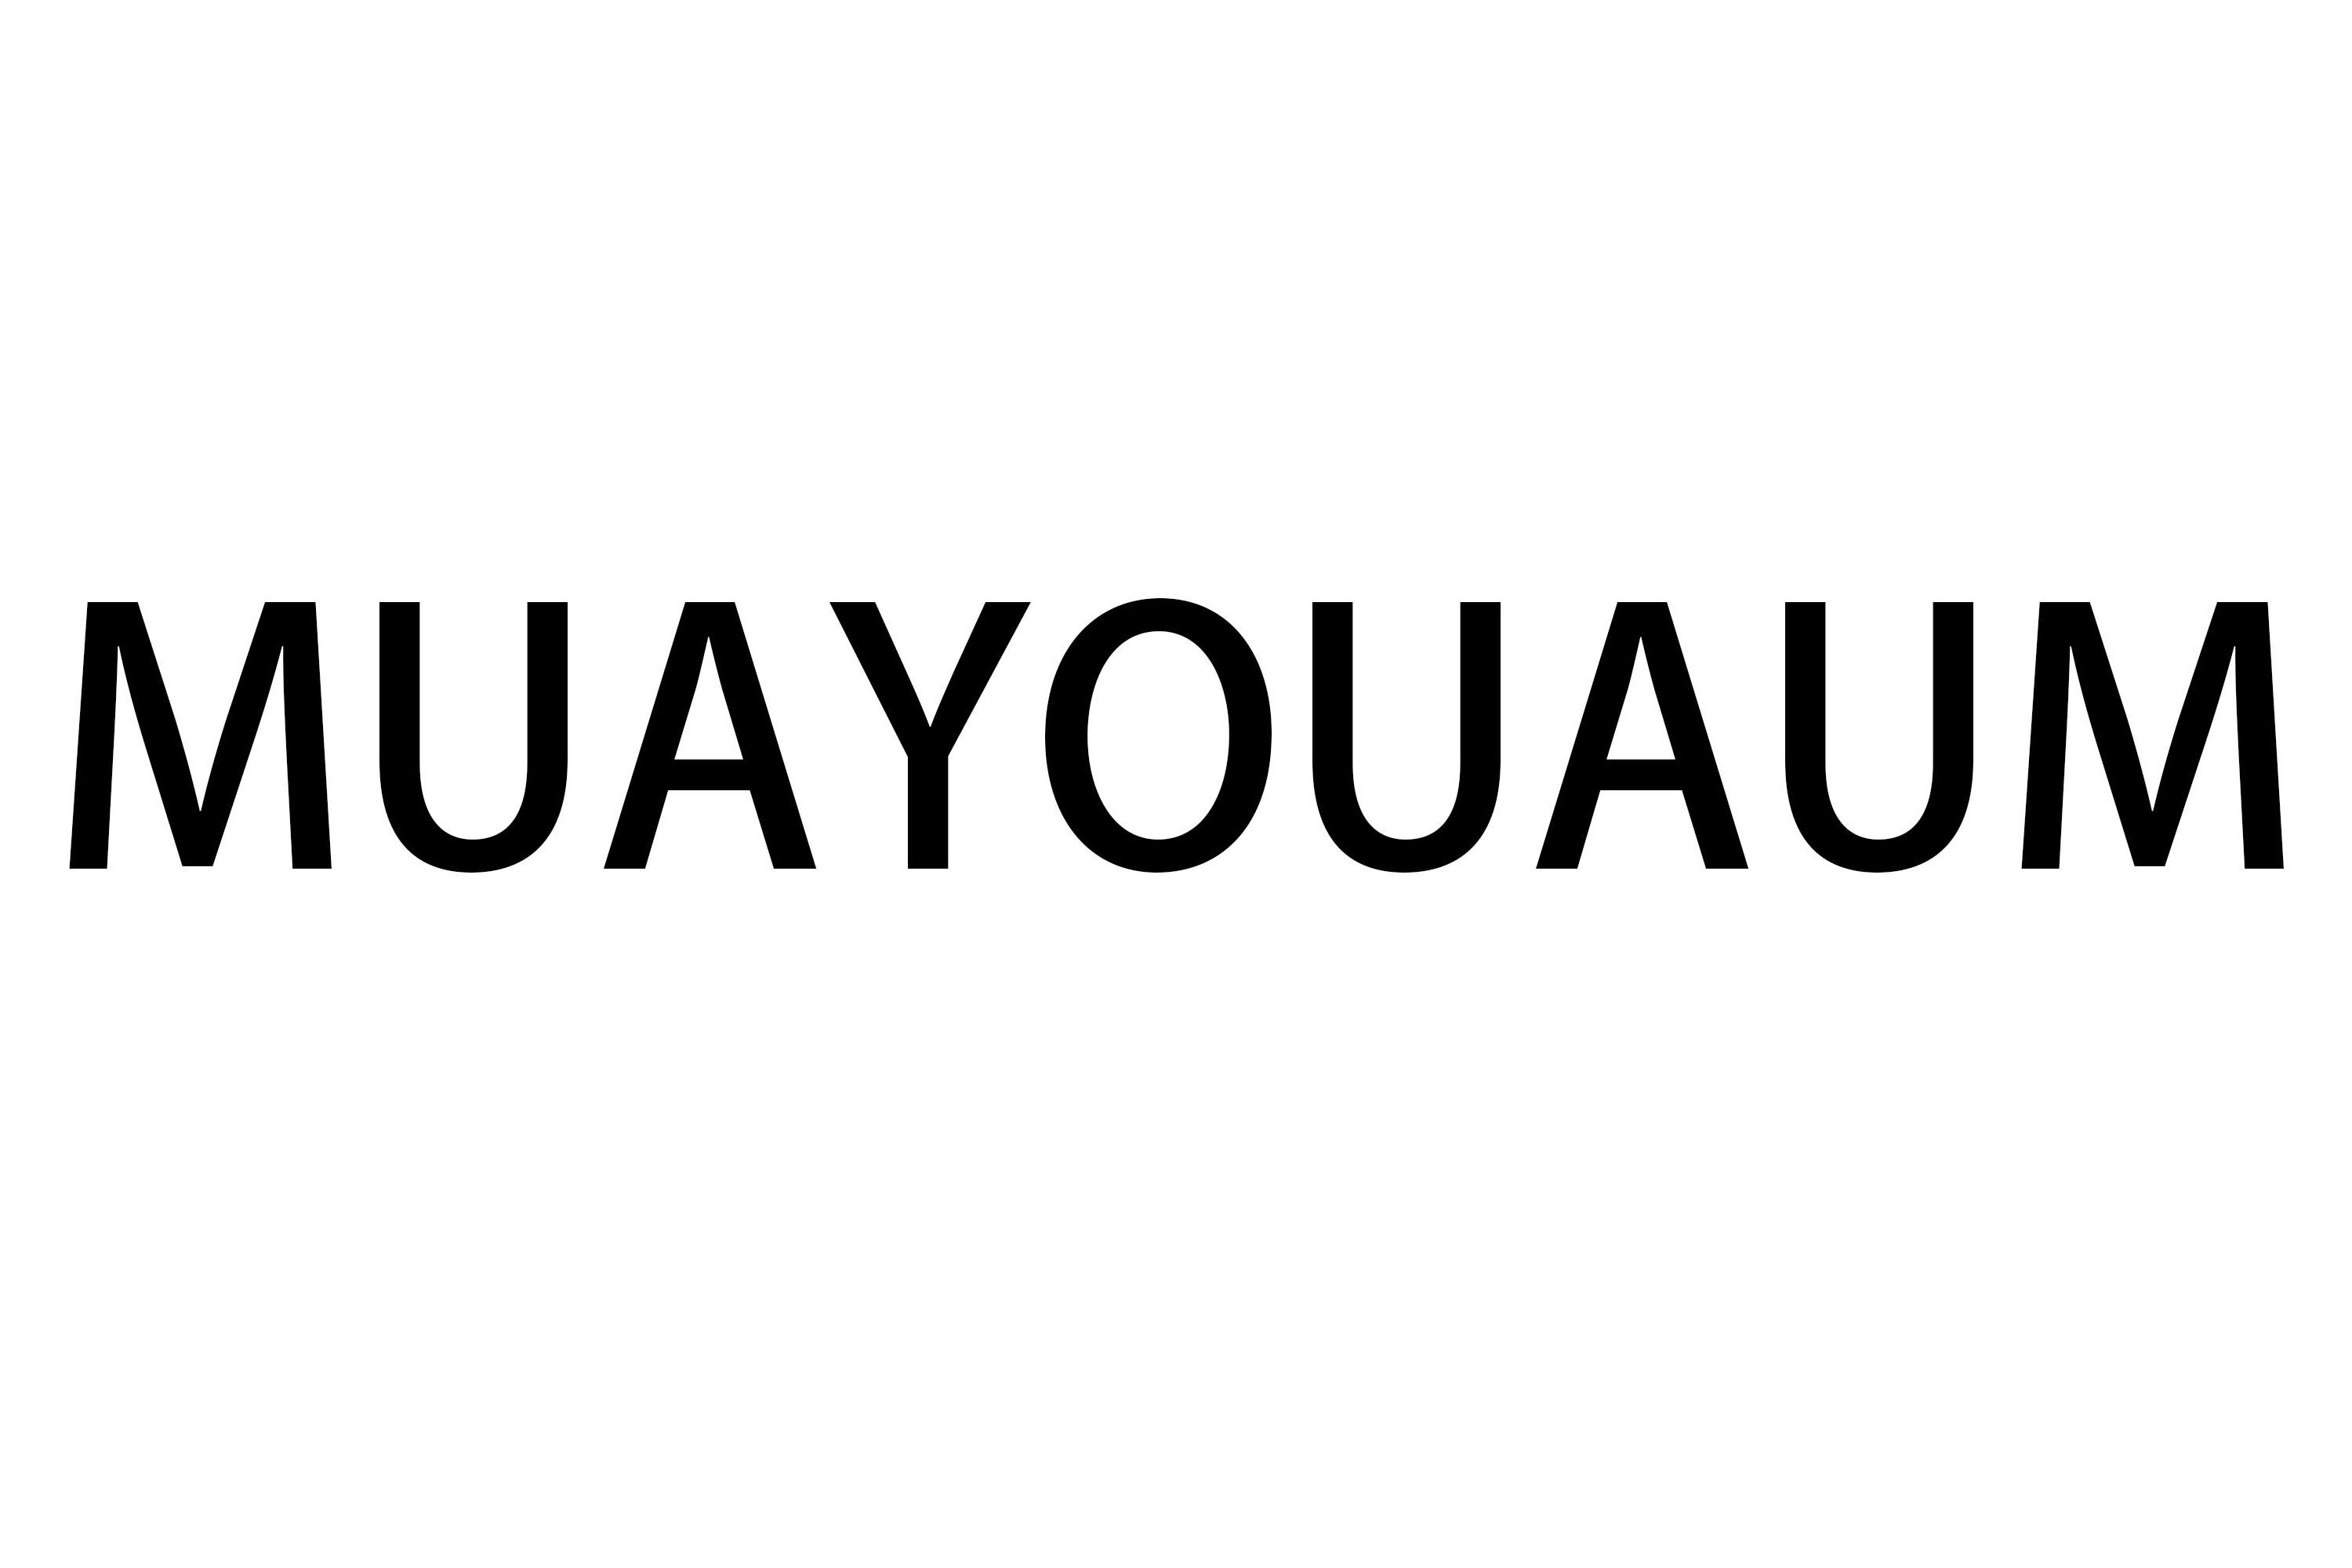  MUAYOUAUM